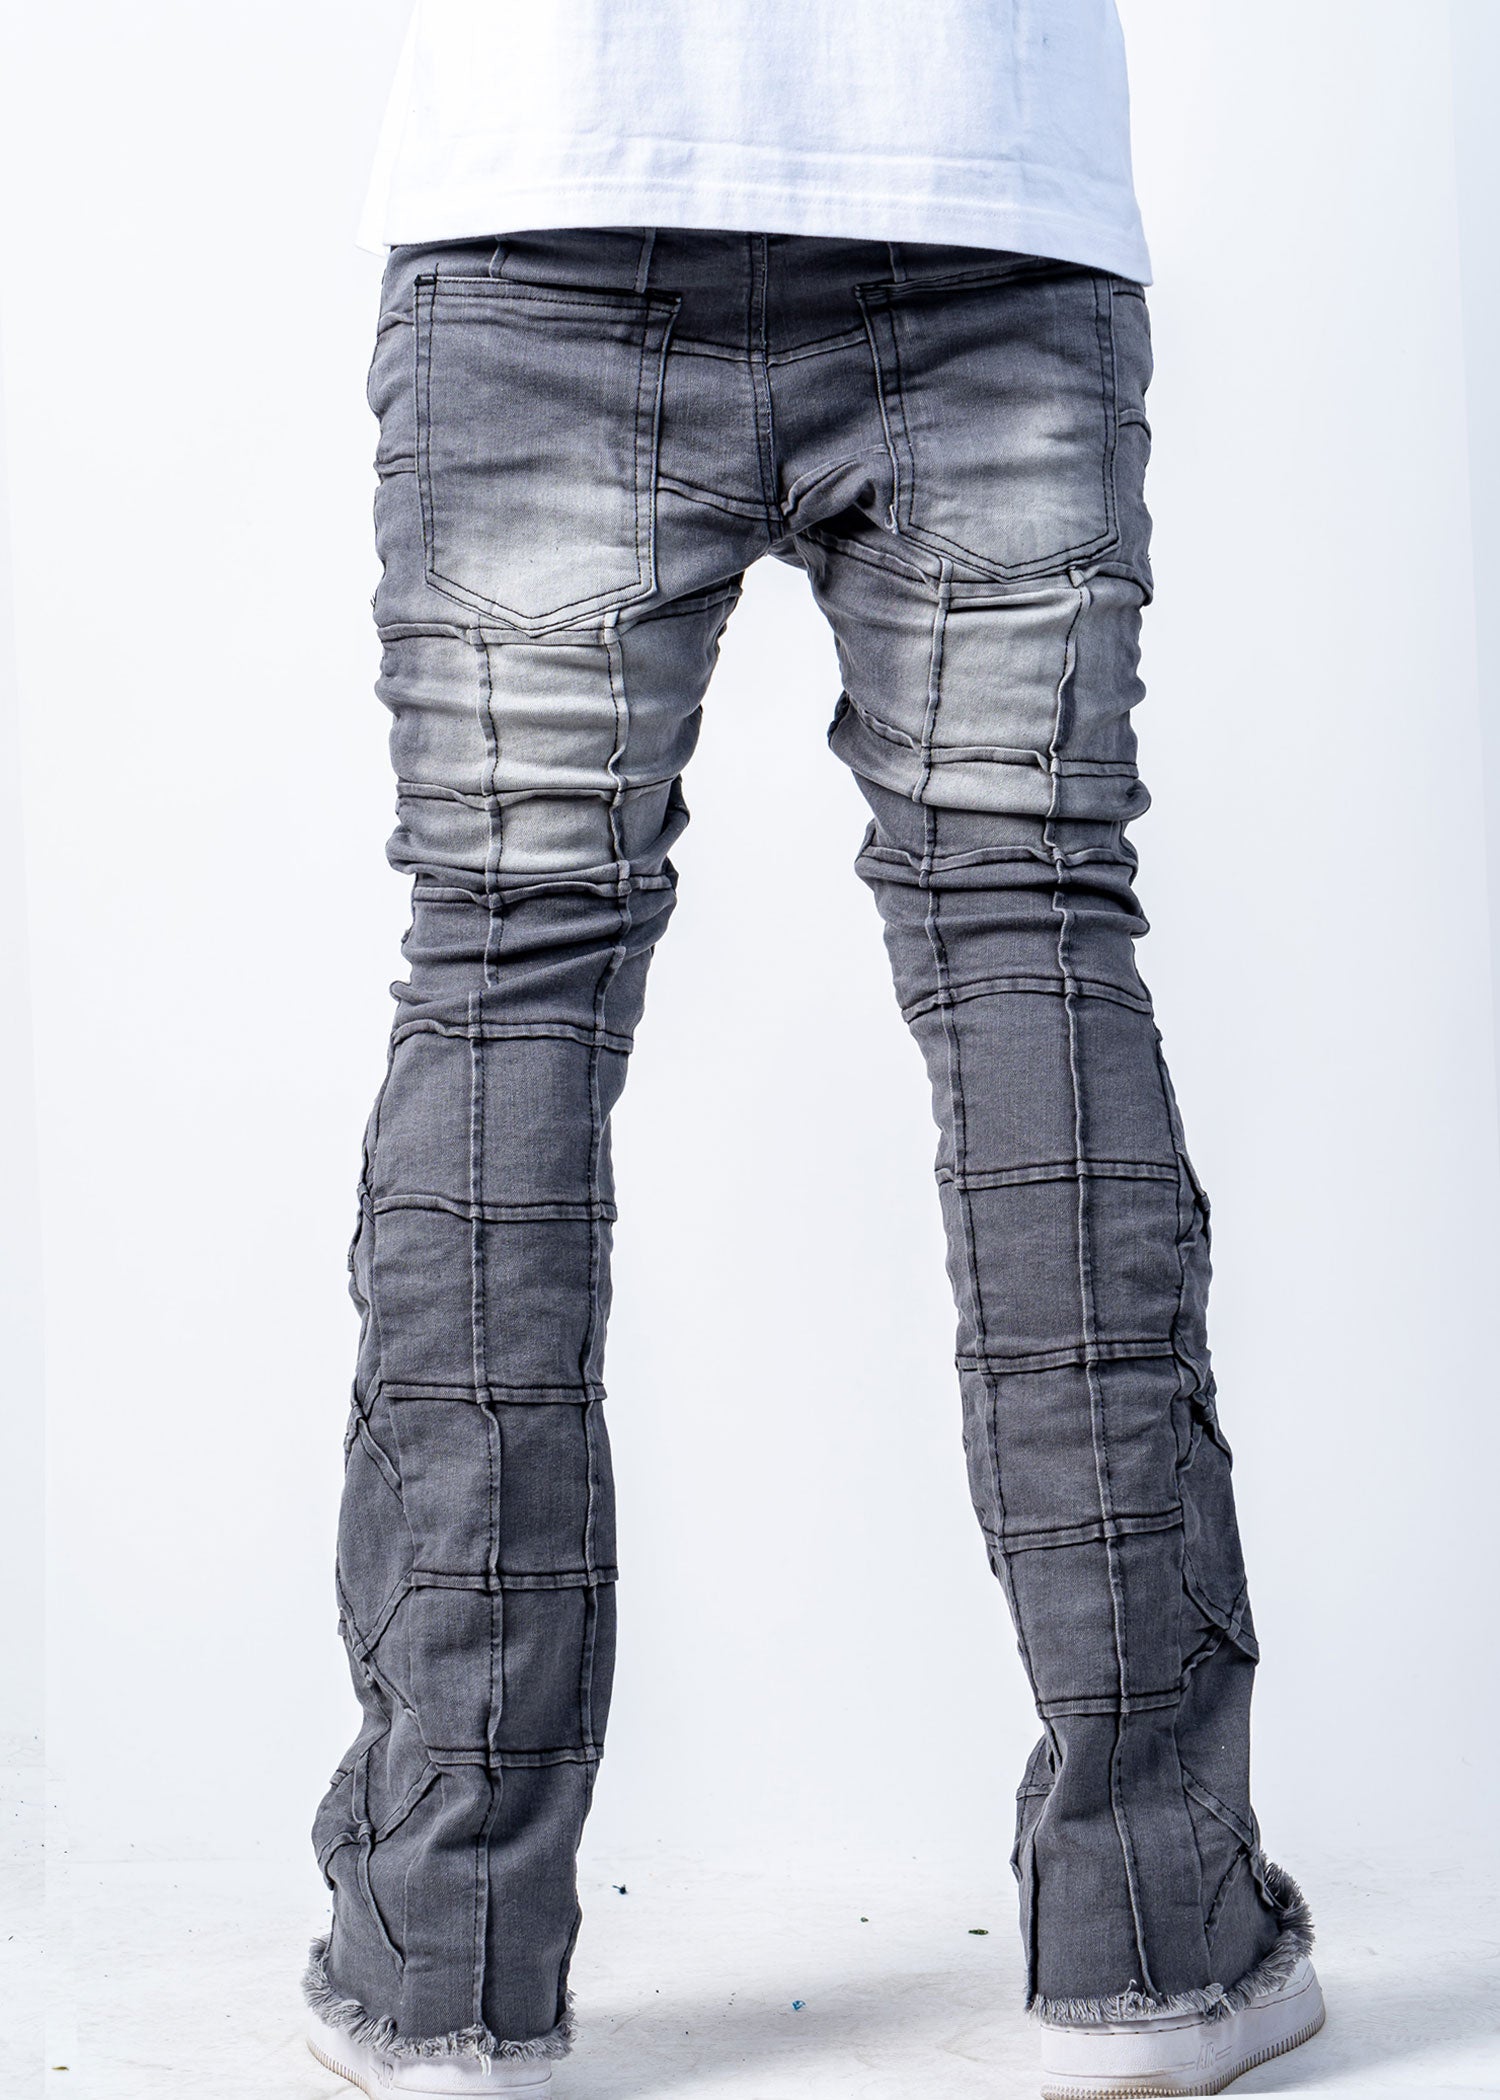 Buy Blue Jeans for Men by DNMX Online | Ajio.com